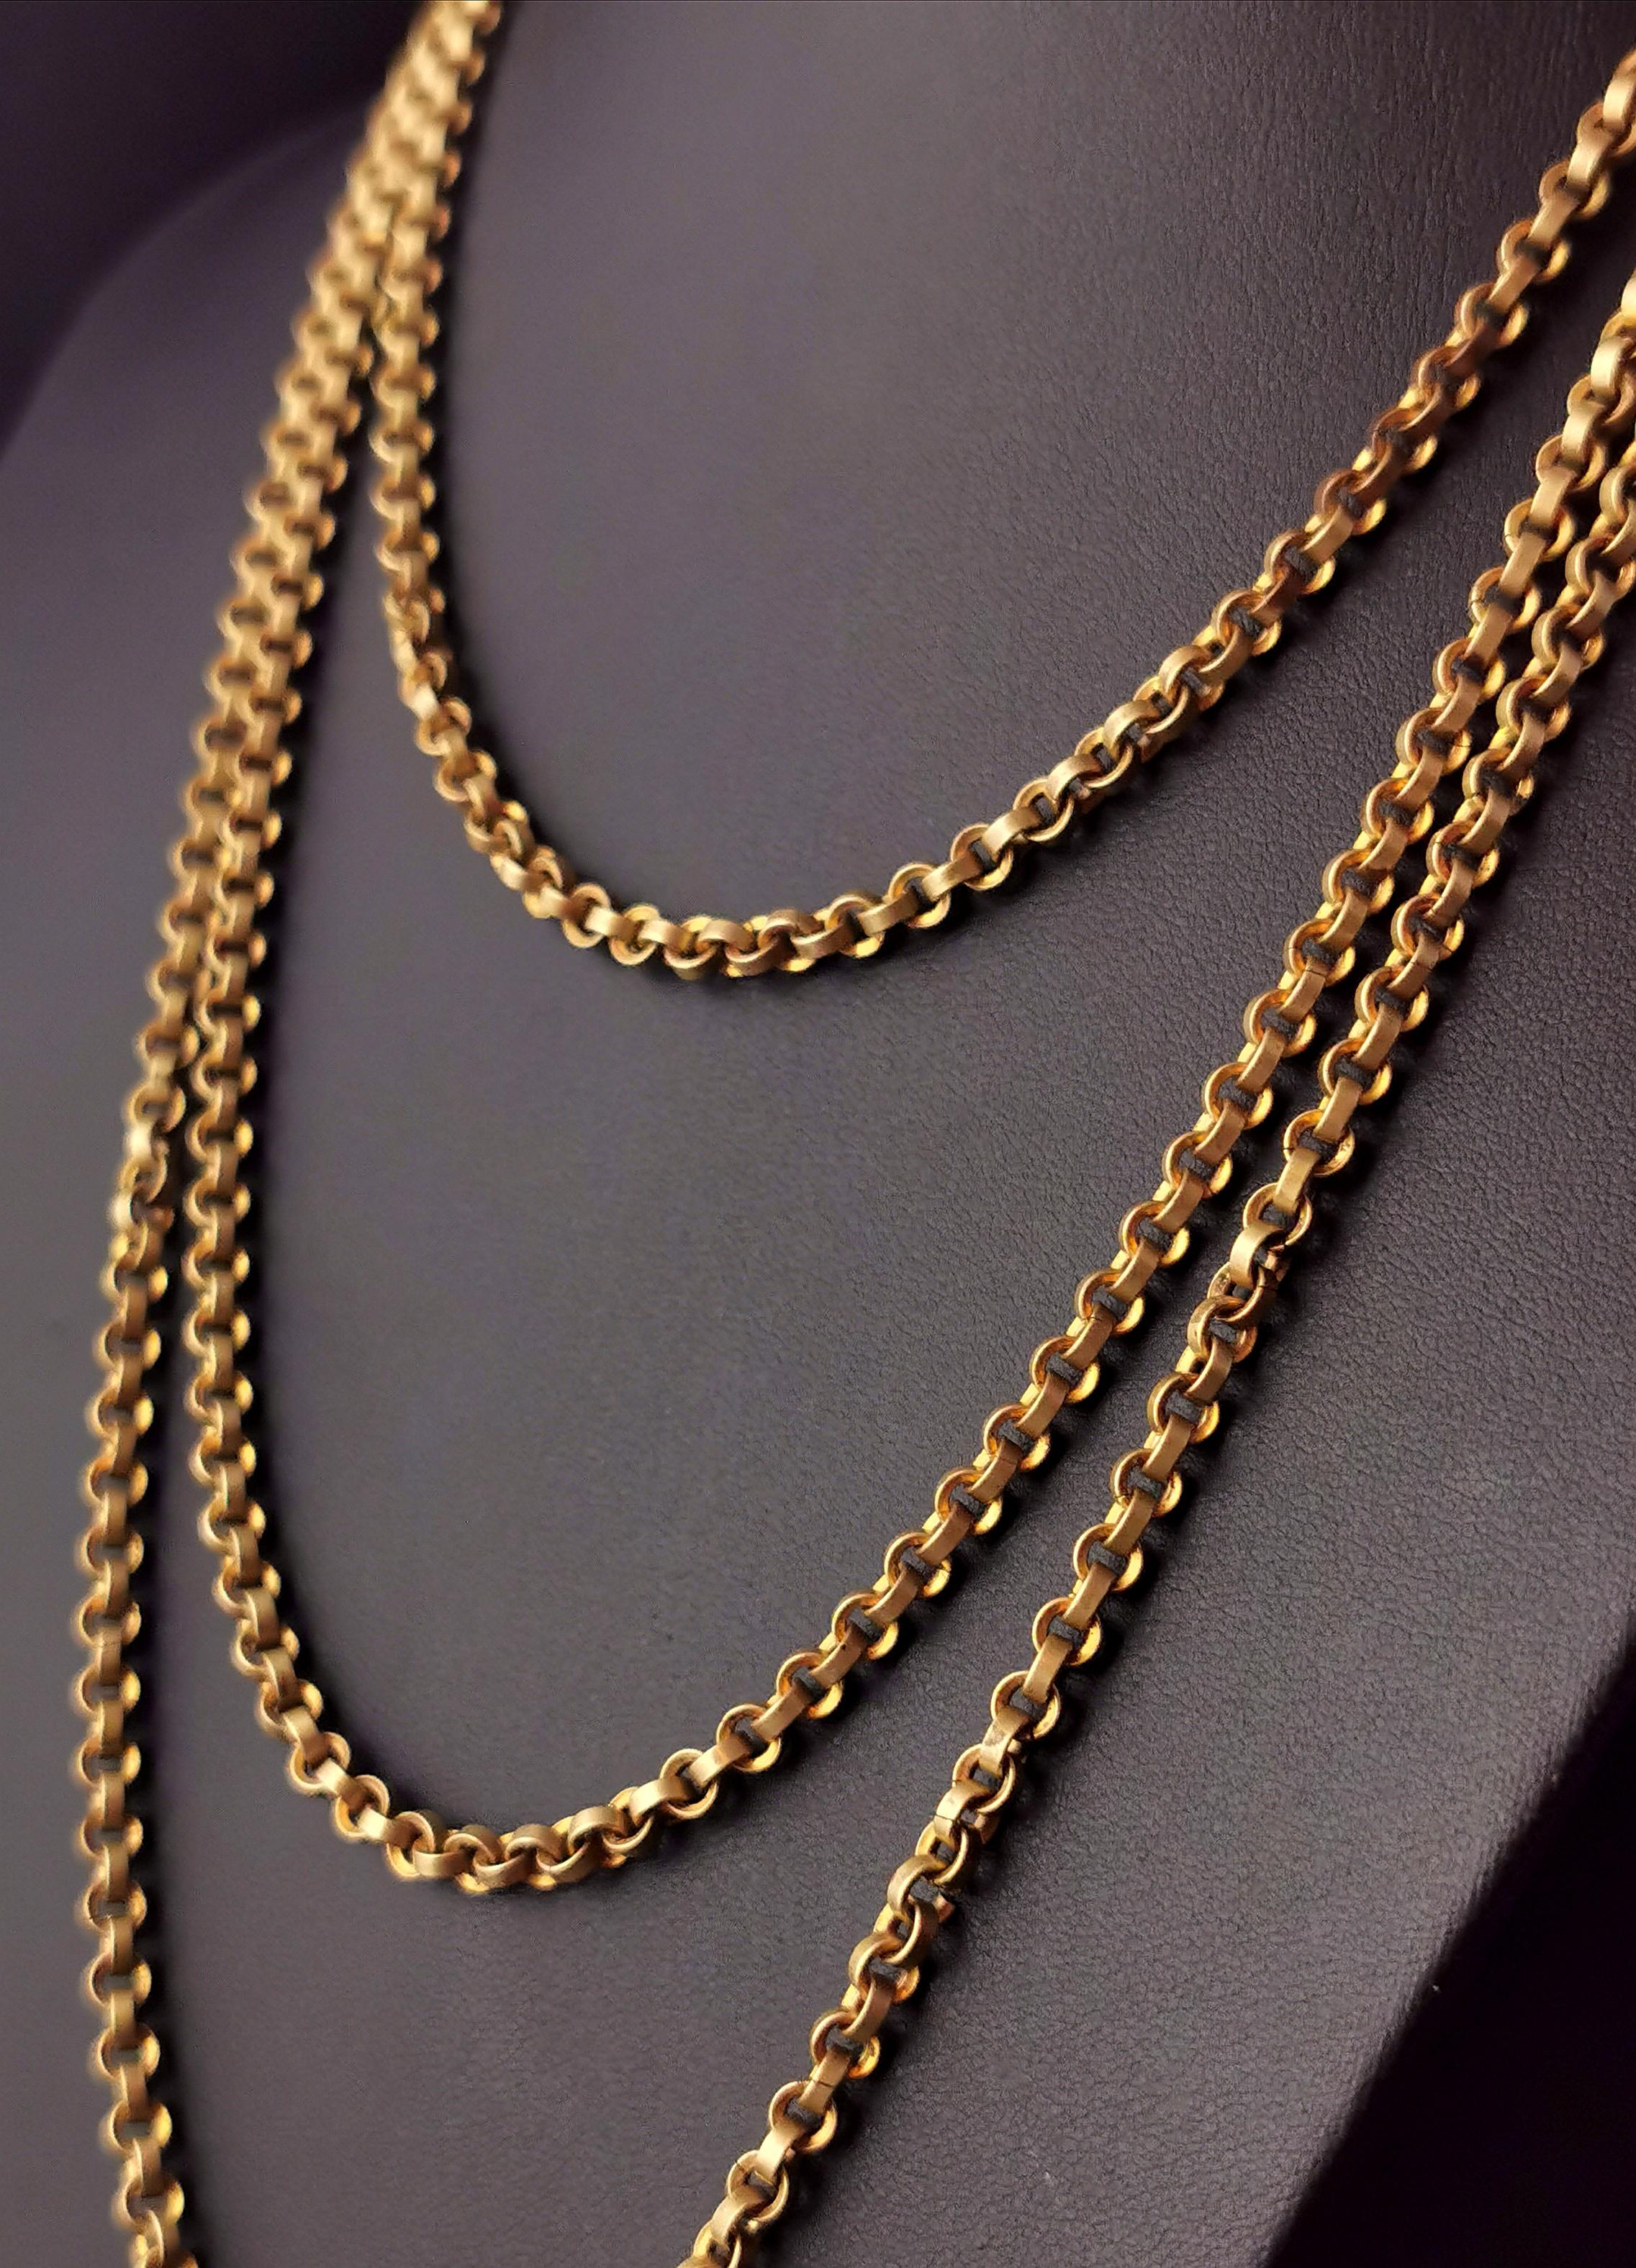 Women's or Men's Antique Georgian Pinchbeck Longuard Chain, Muff Chain Necklace